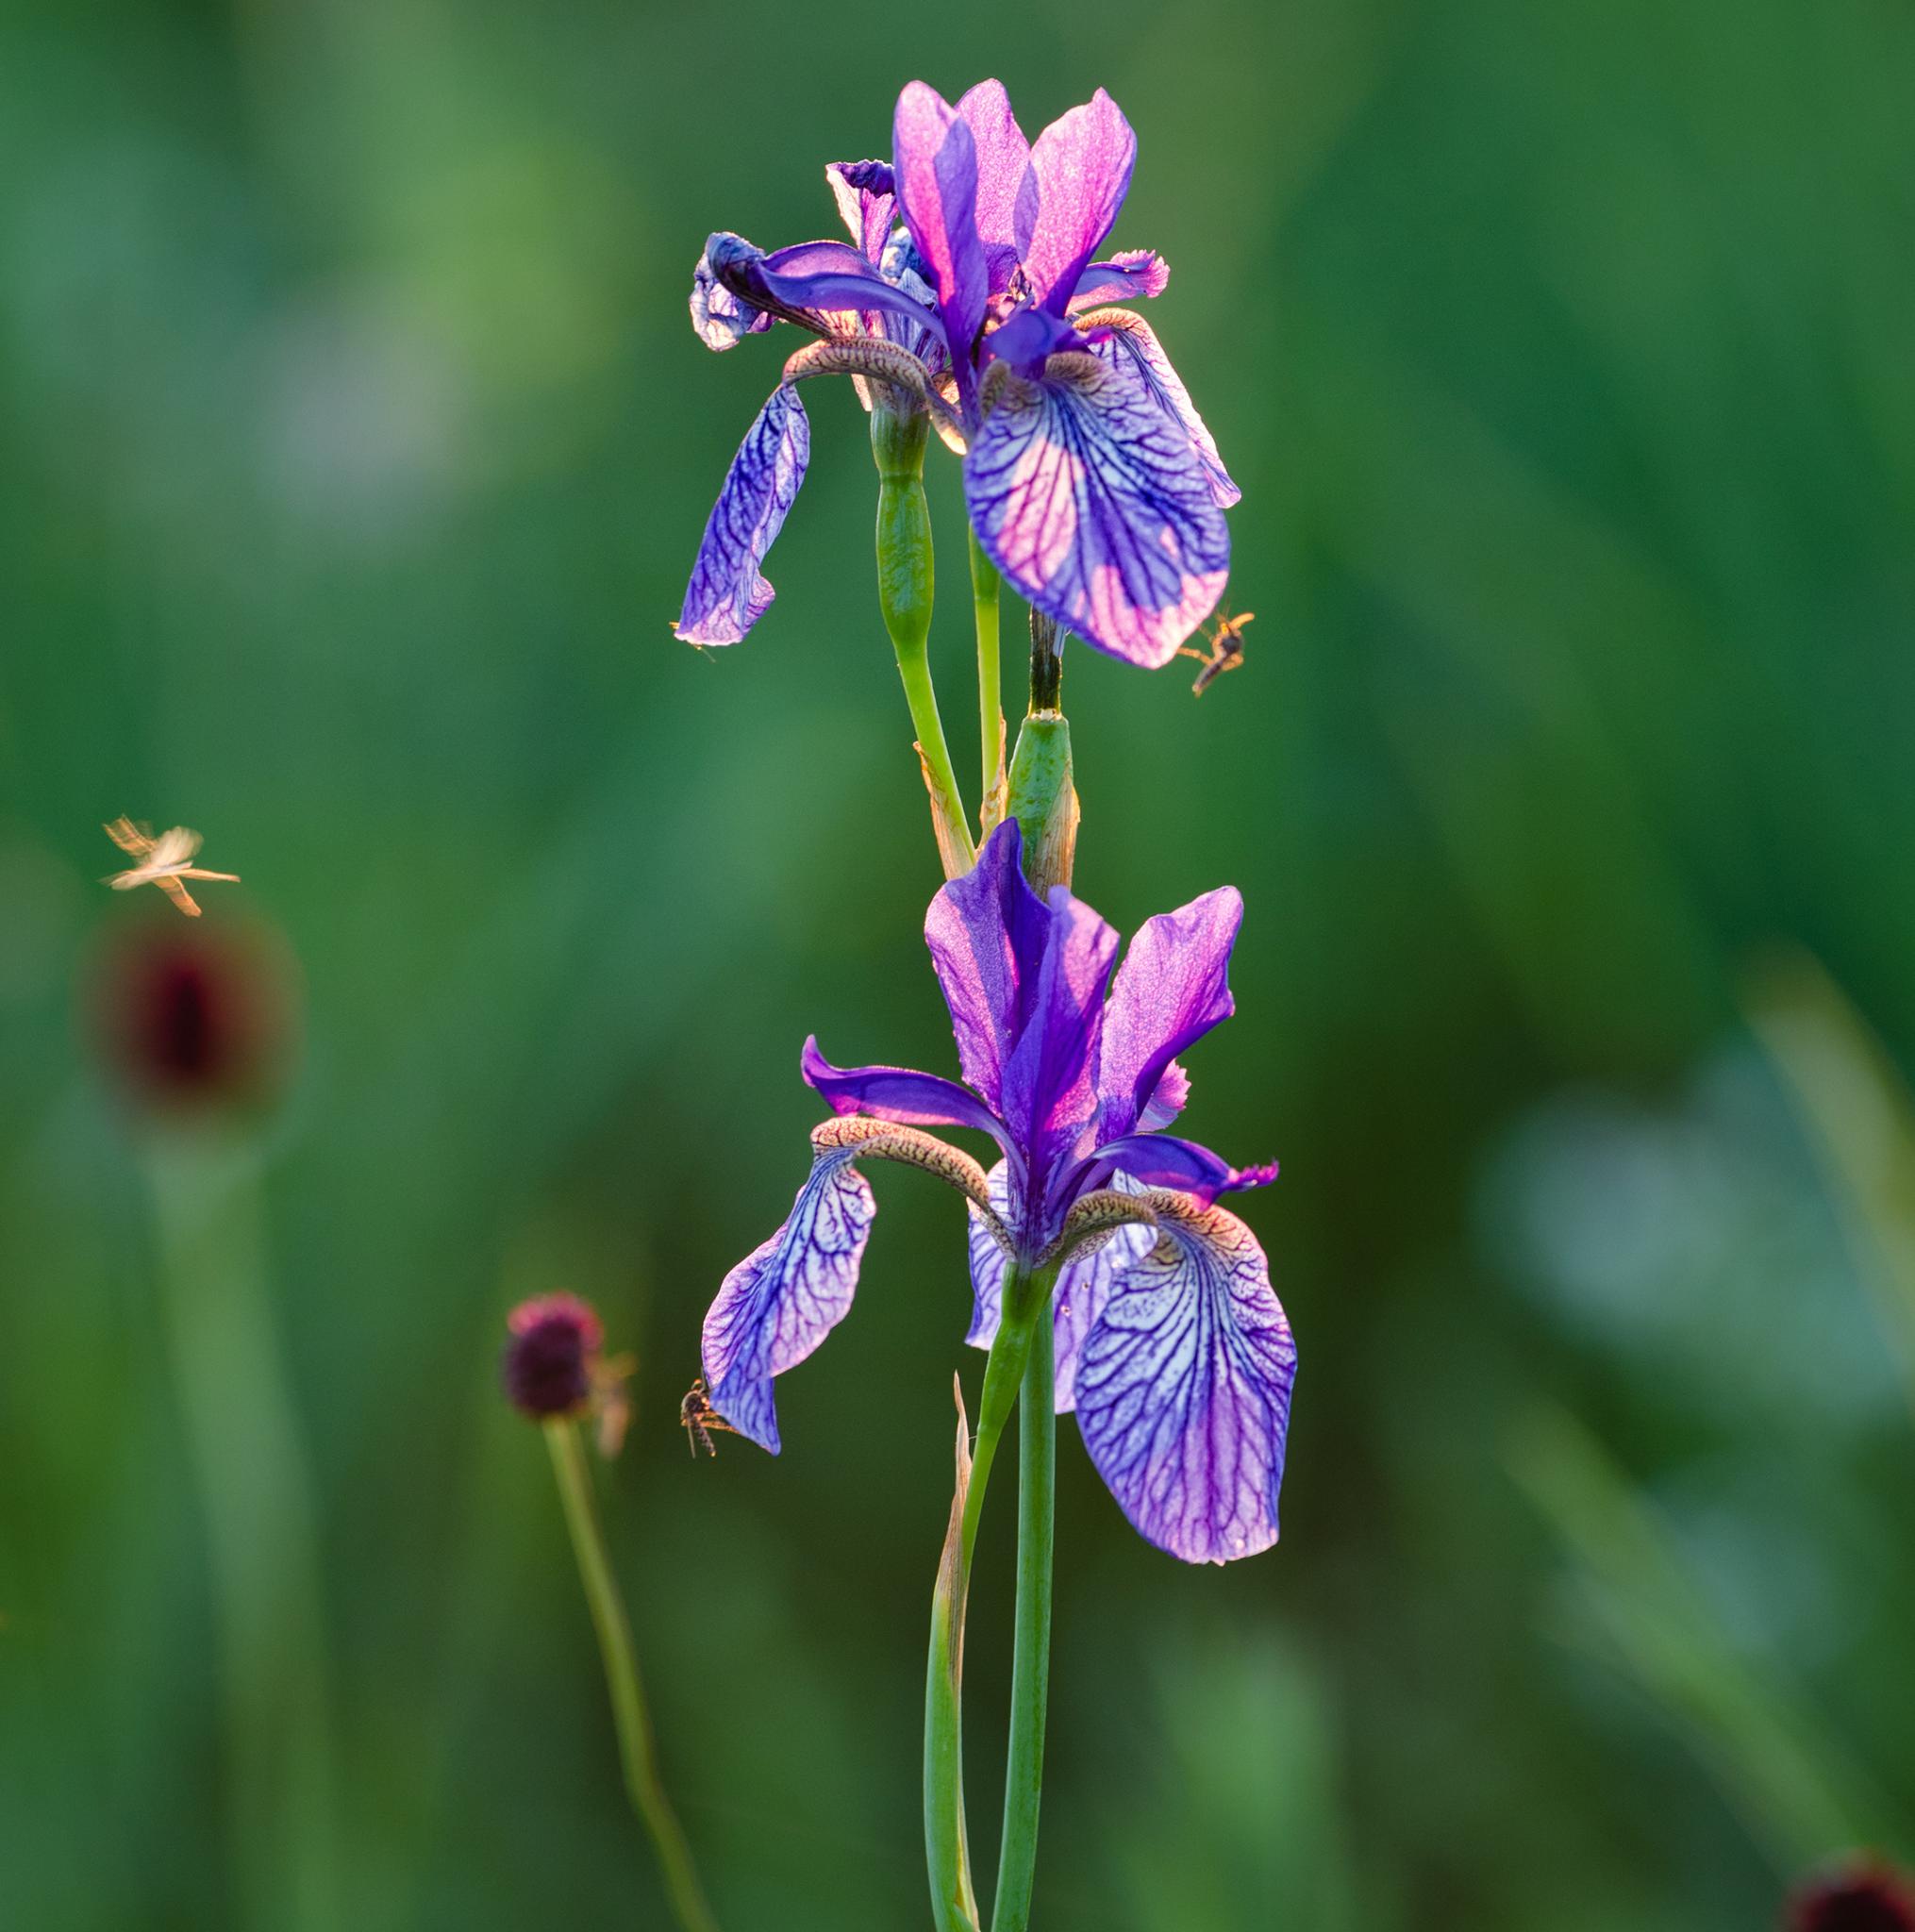 Growing the Siberian Iris